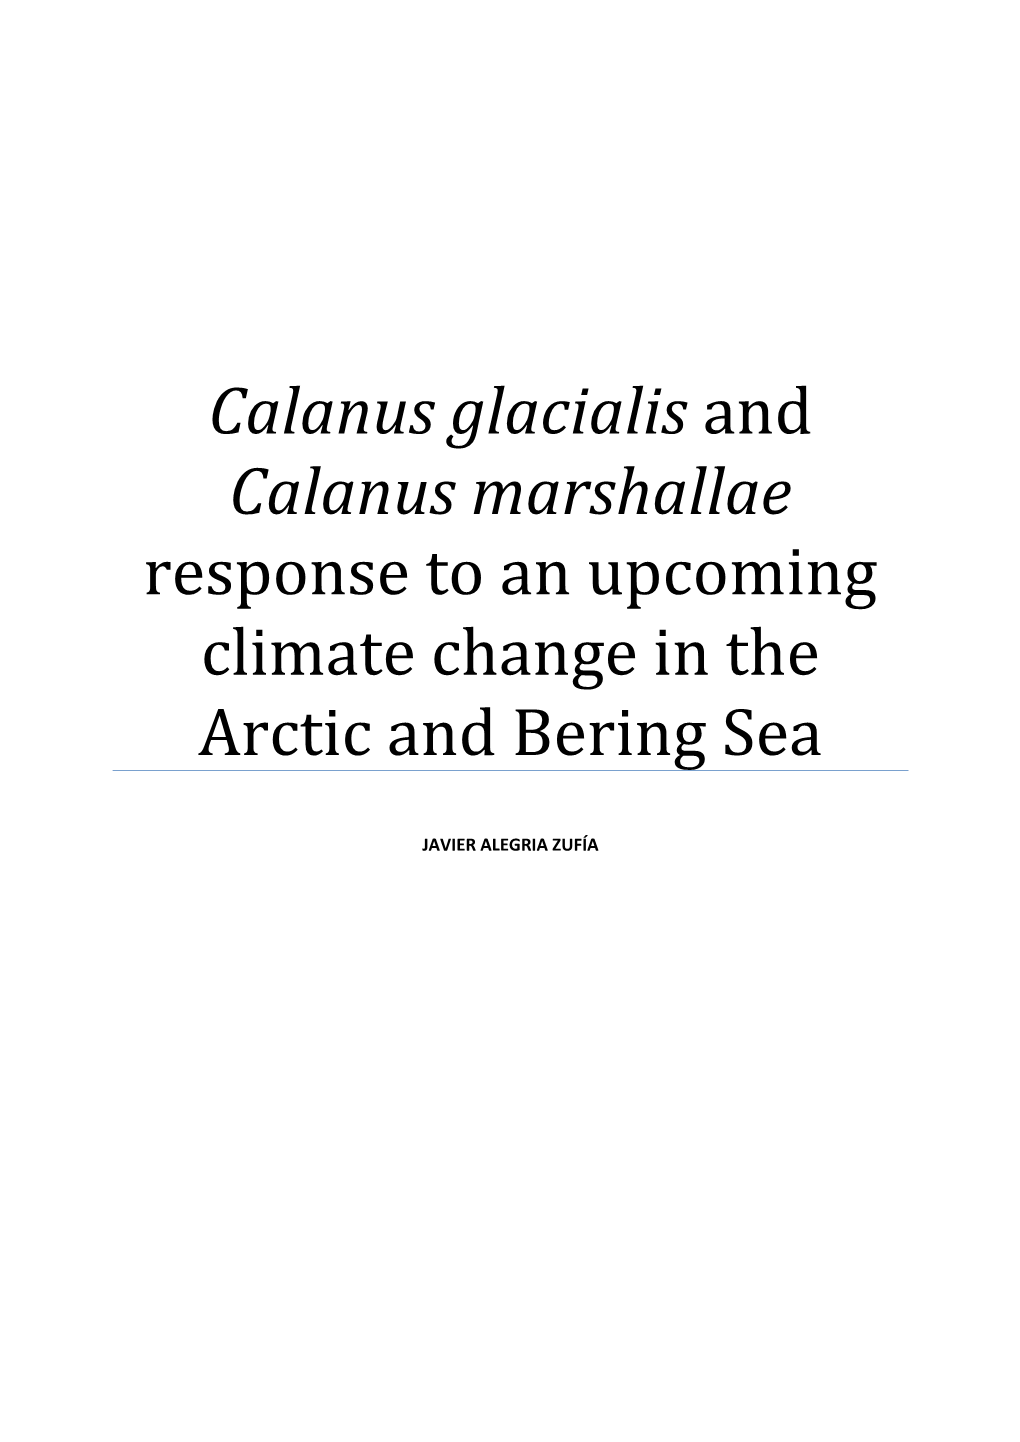 Calanus Glacialis and Calanus Marshallae Response to an Upcoming Climate Change in the Arctic and Bering Sea